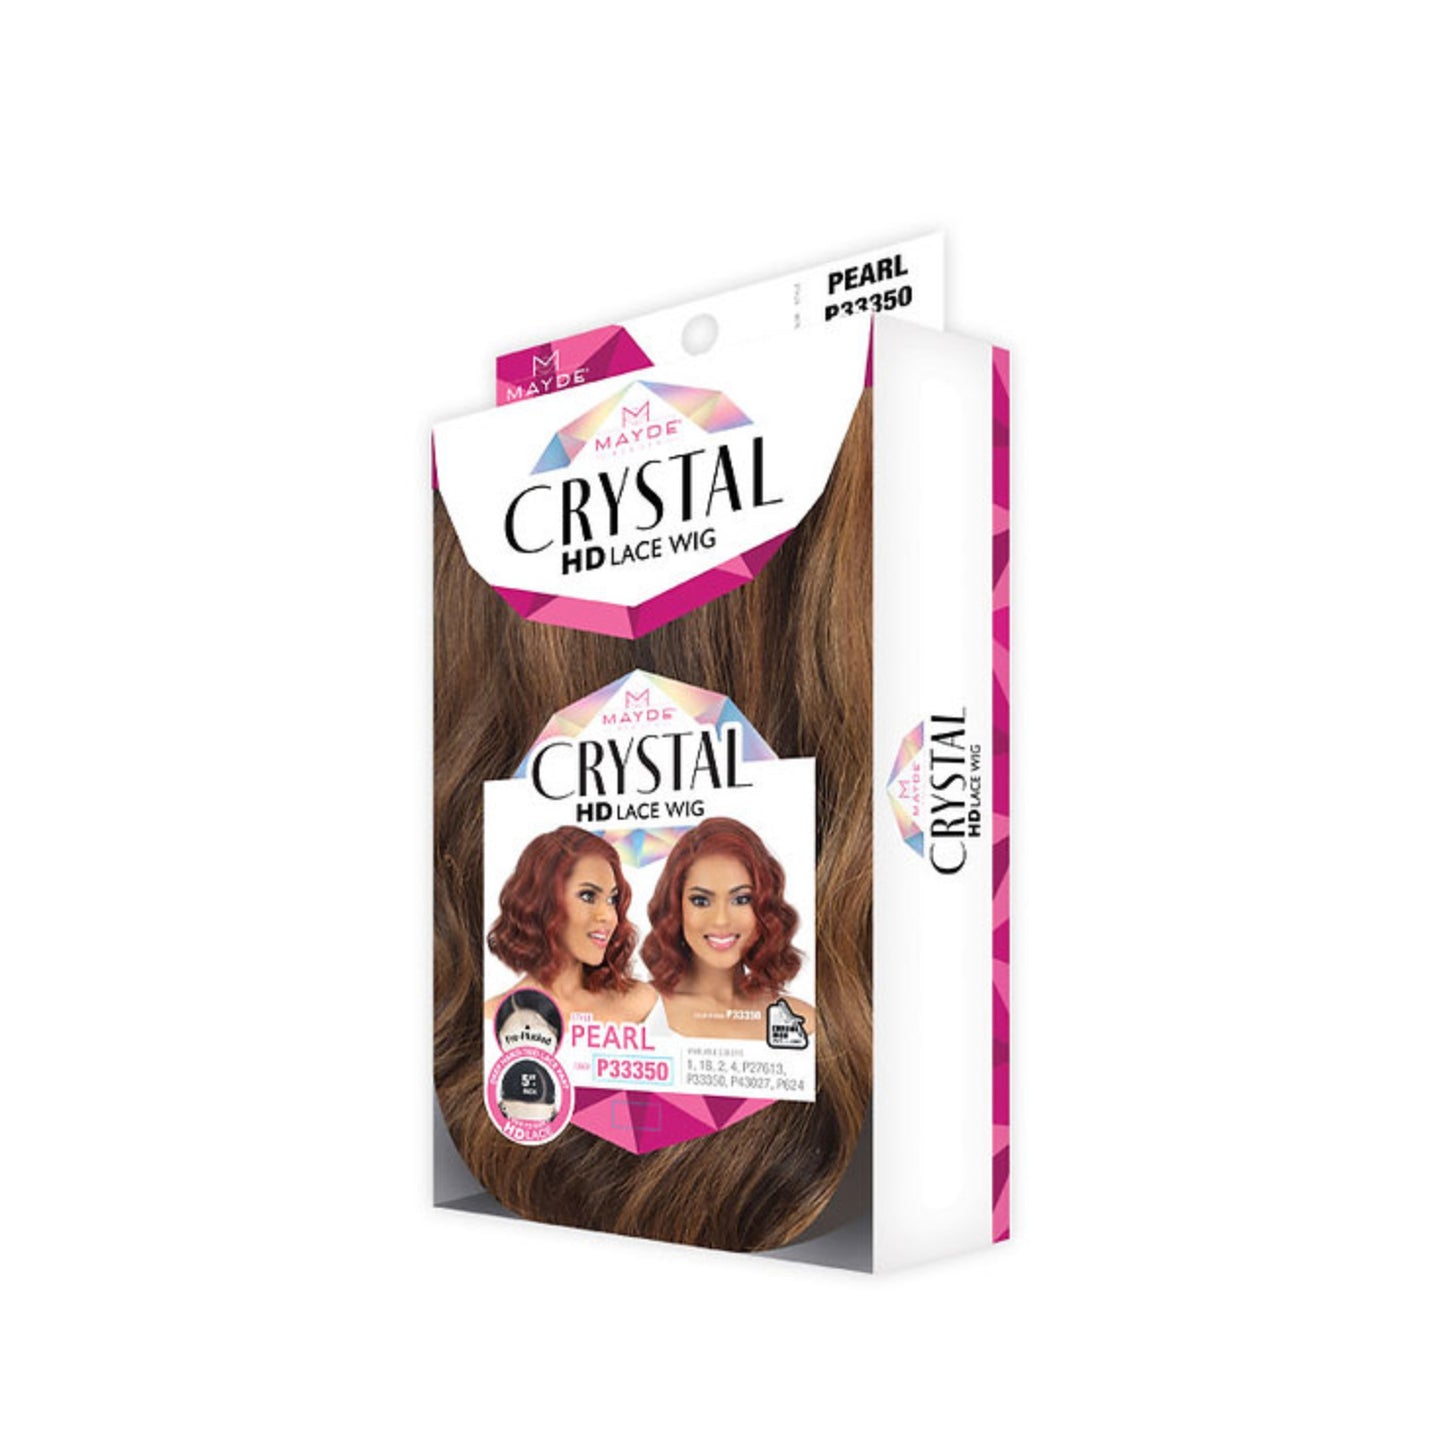 Mayde Beauty Crystal HD Lace Wig - PEARL